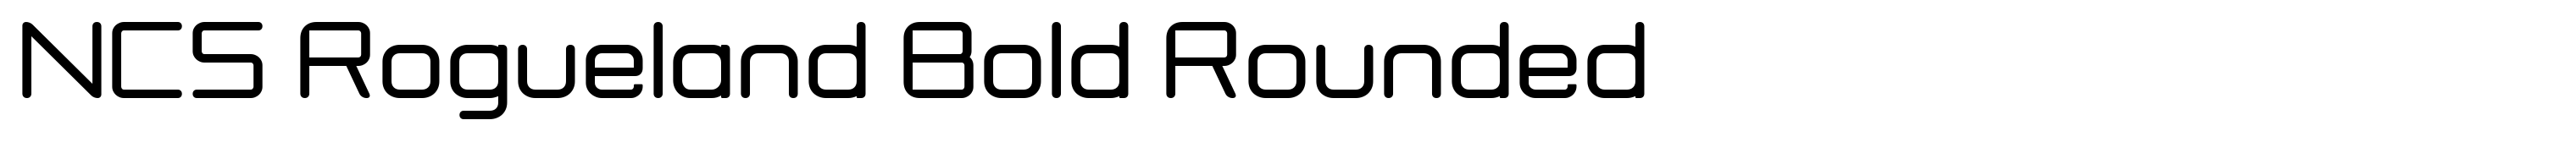 NCS Rogueland Bold Rounded